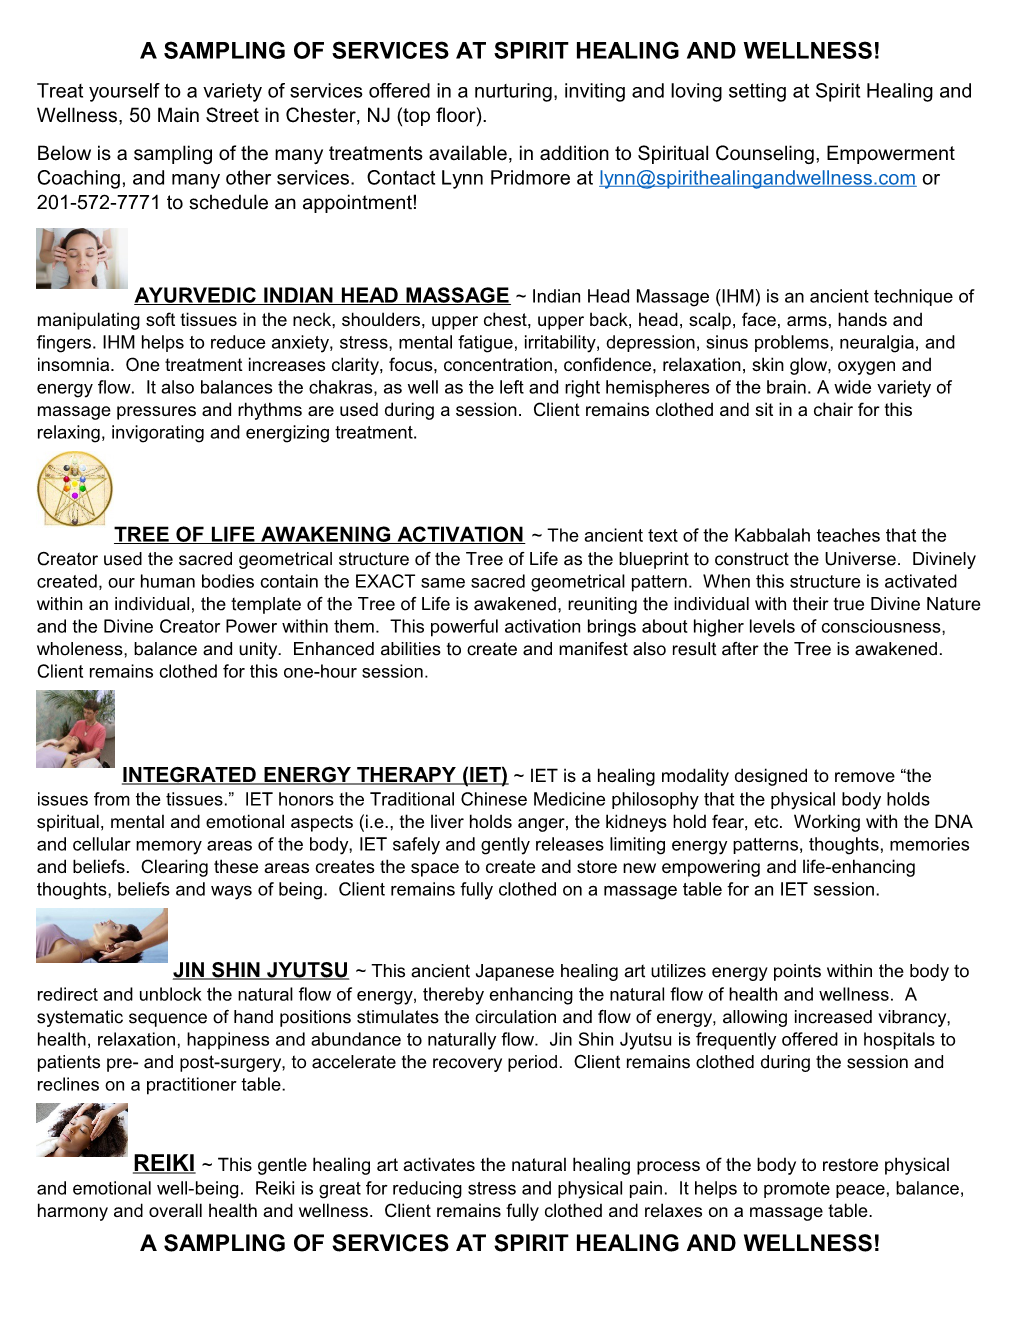 A Sampling of Services at Spirit Healing and Wellness!